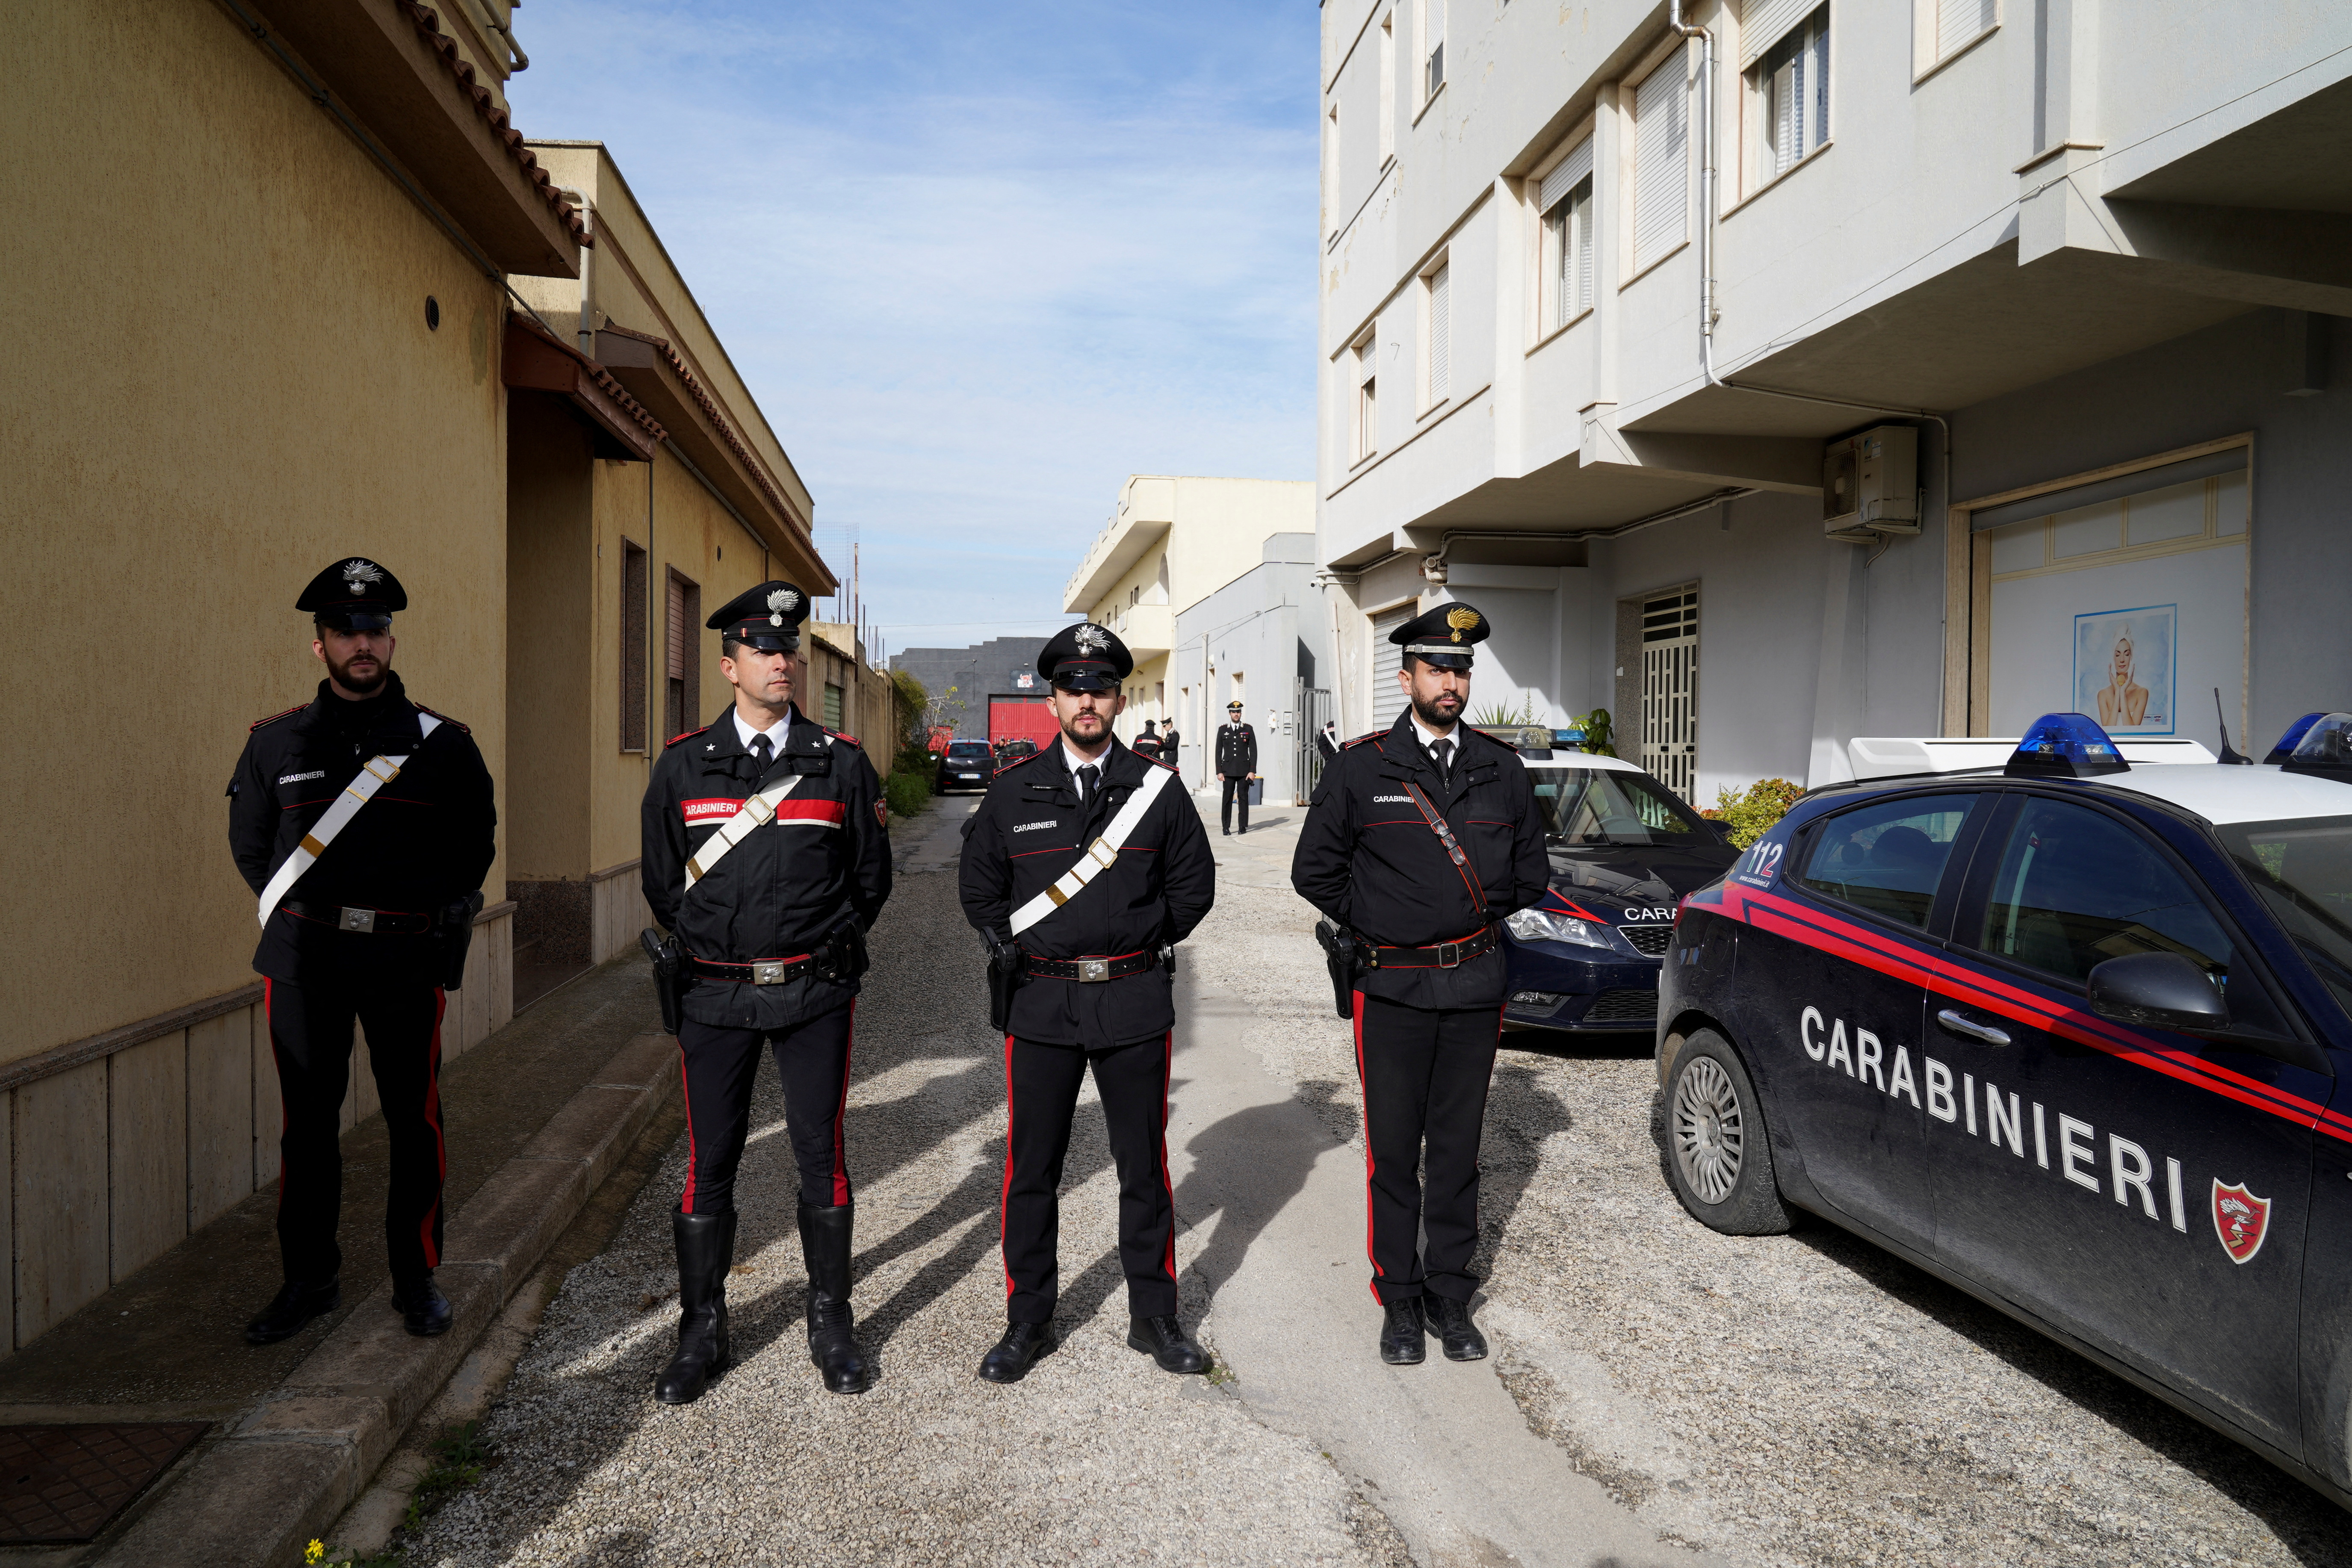 Carabinieri police stand guard near the hideout of Matteo Messina Tenaro, Italy's most wanted mafia boss